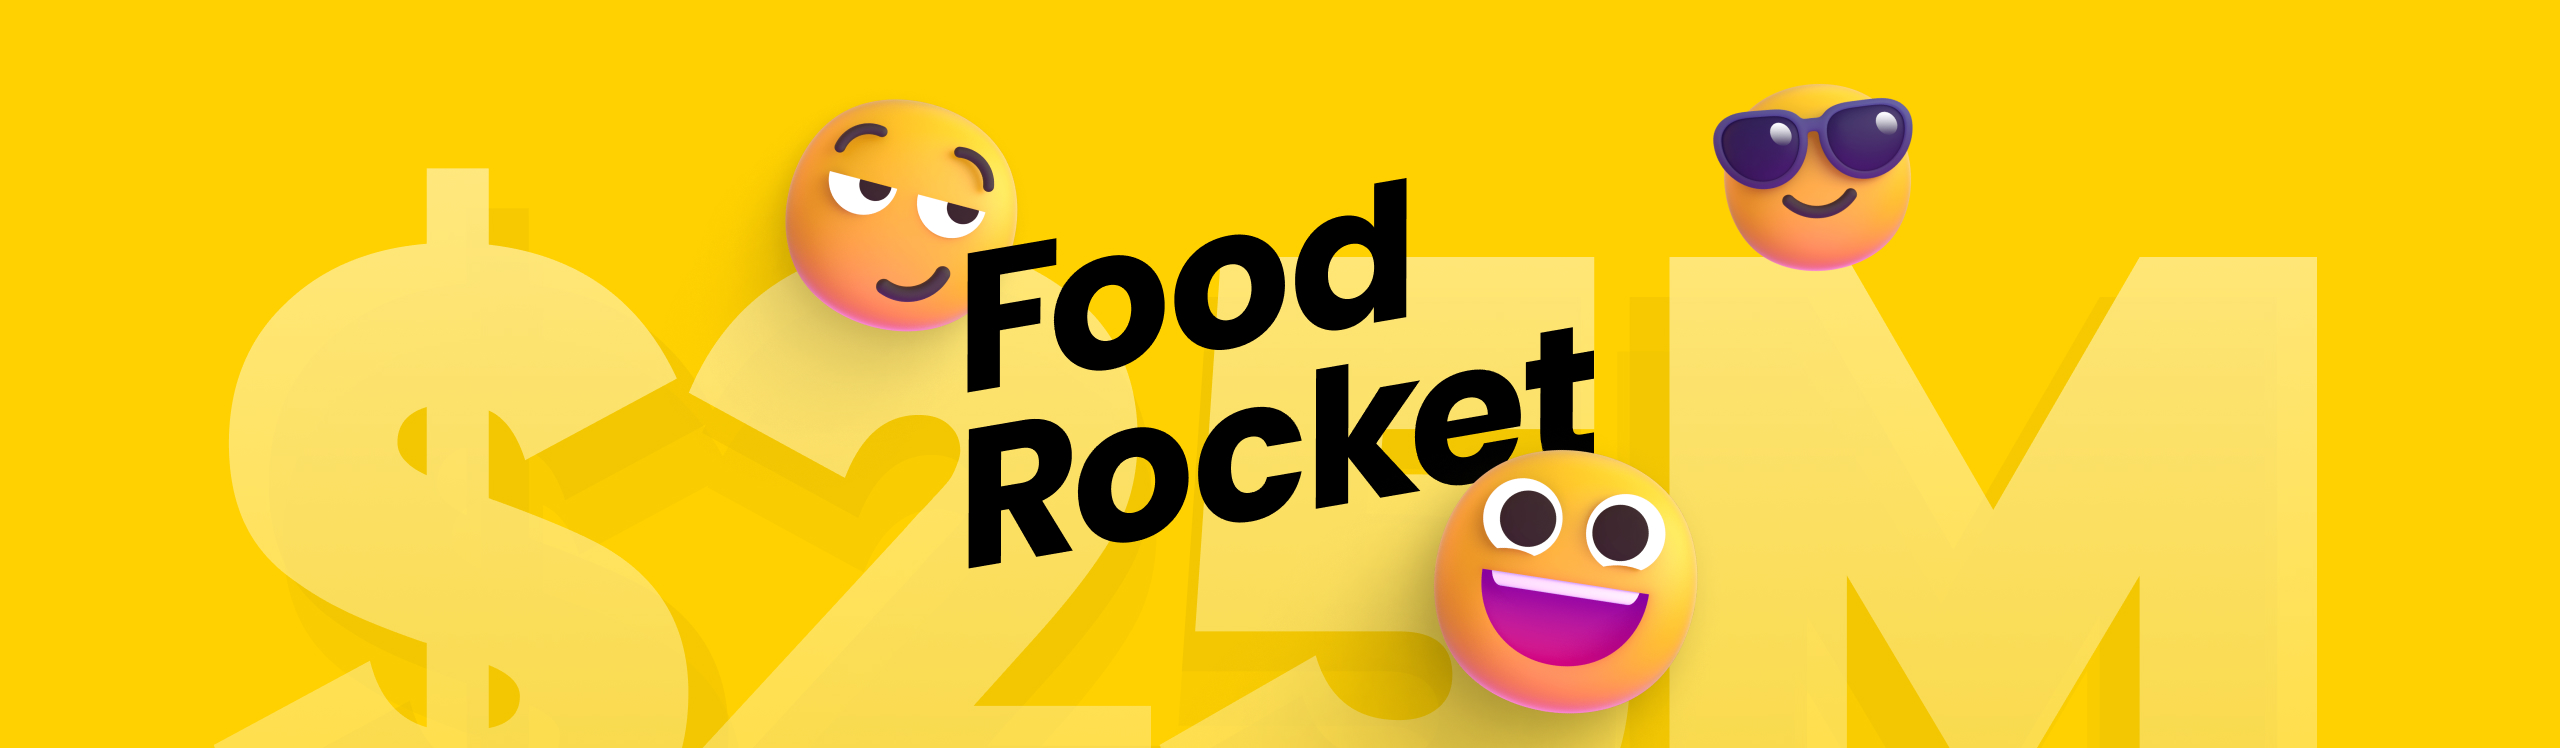 Diffco client Food Rocket raises $25M, Circle K Partnership